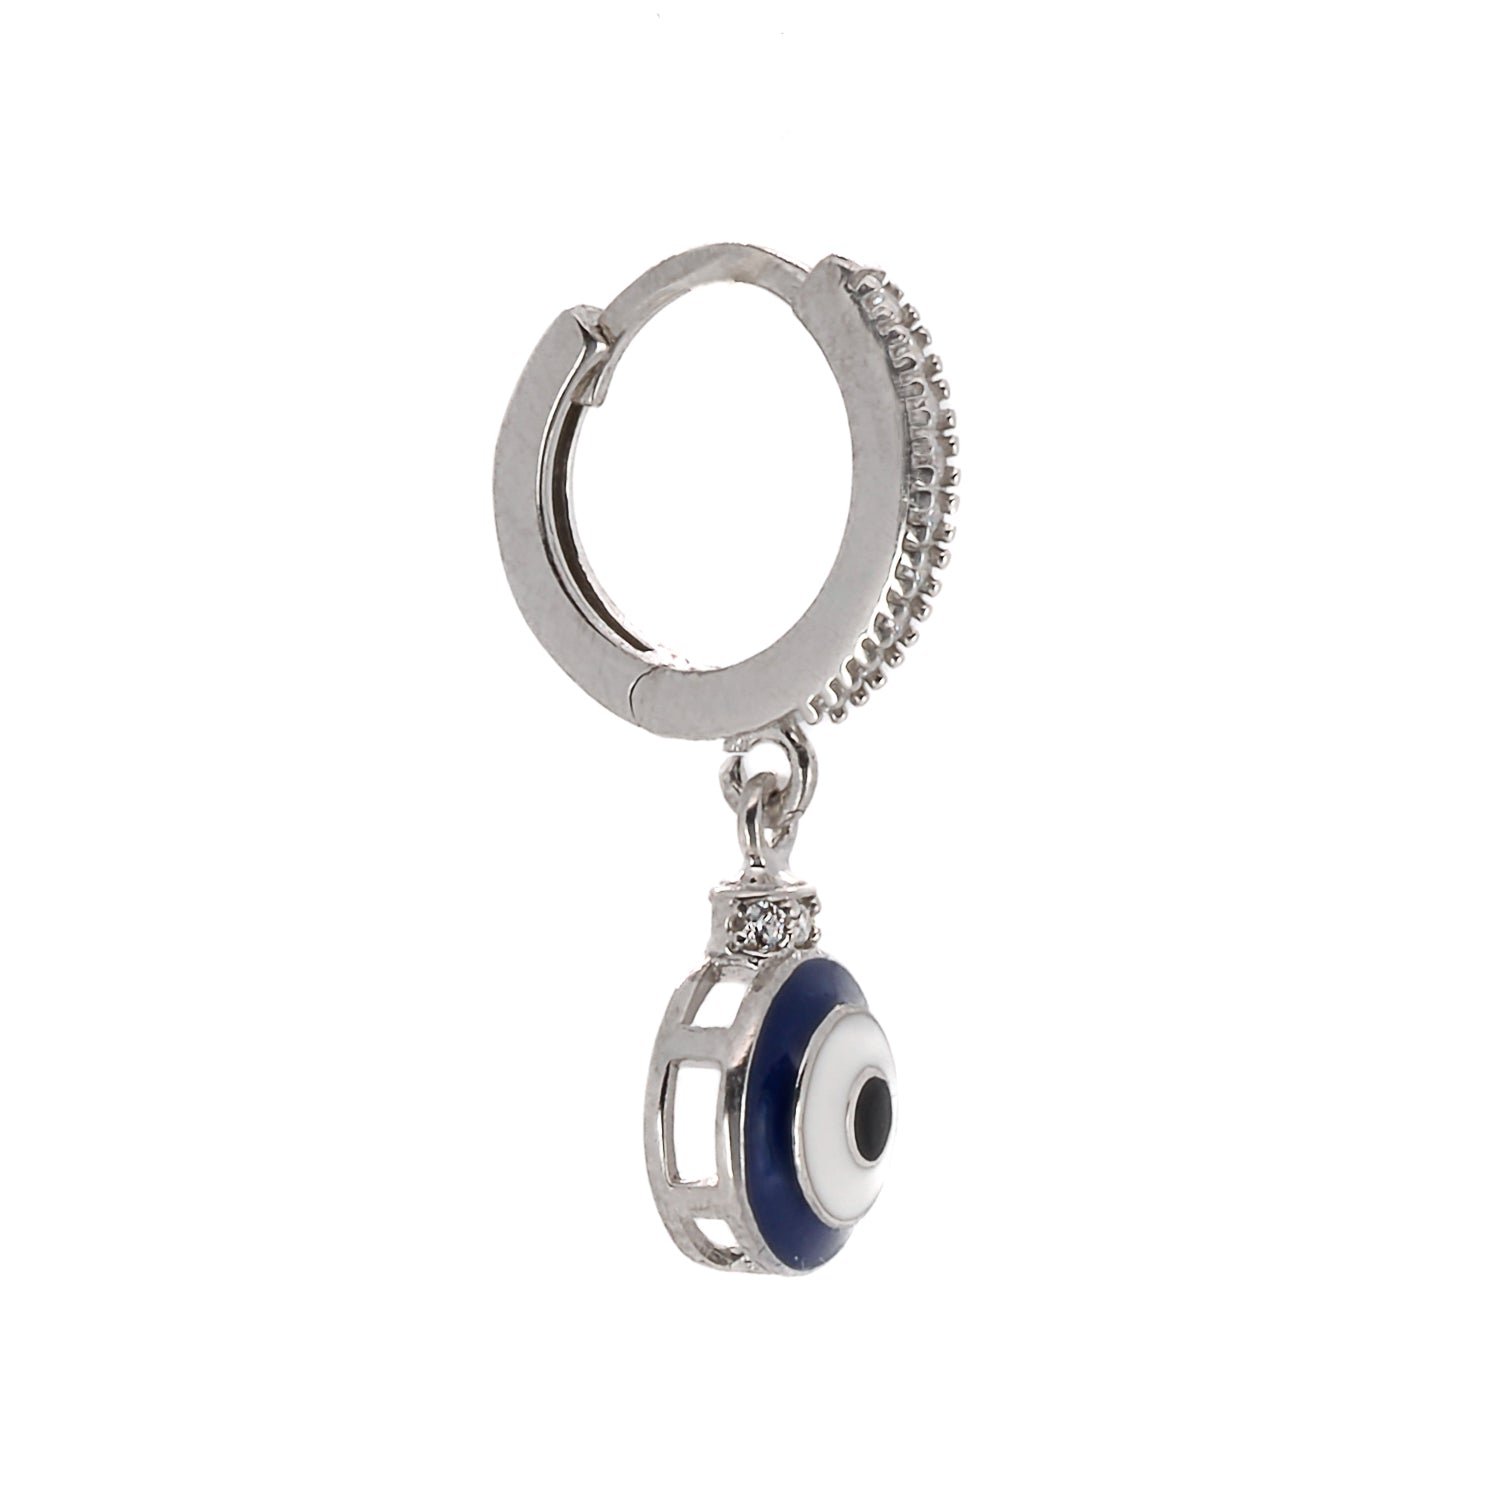 Handmade sterling silver earrings featuring a delicate blue evil eye design